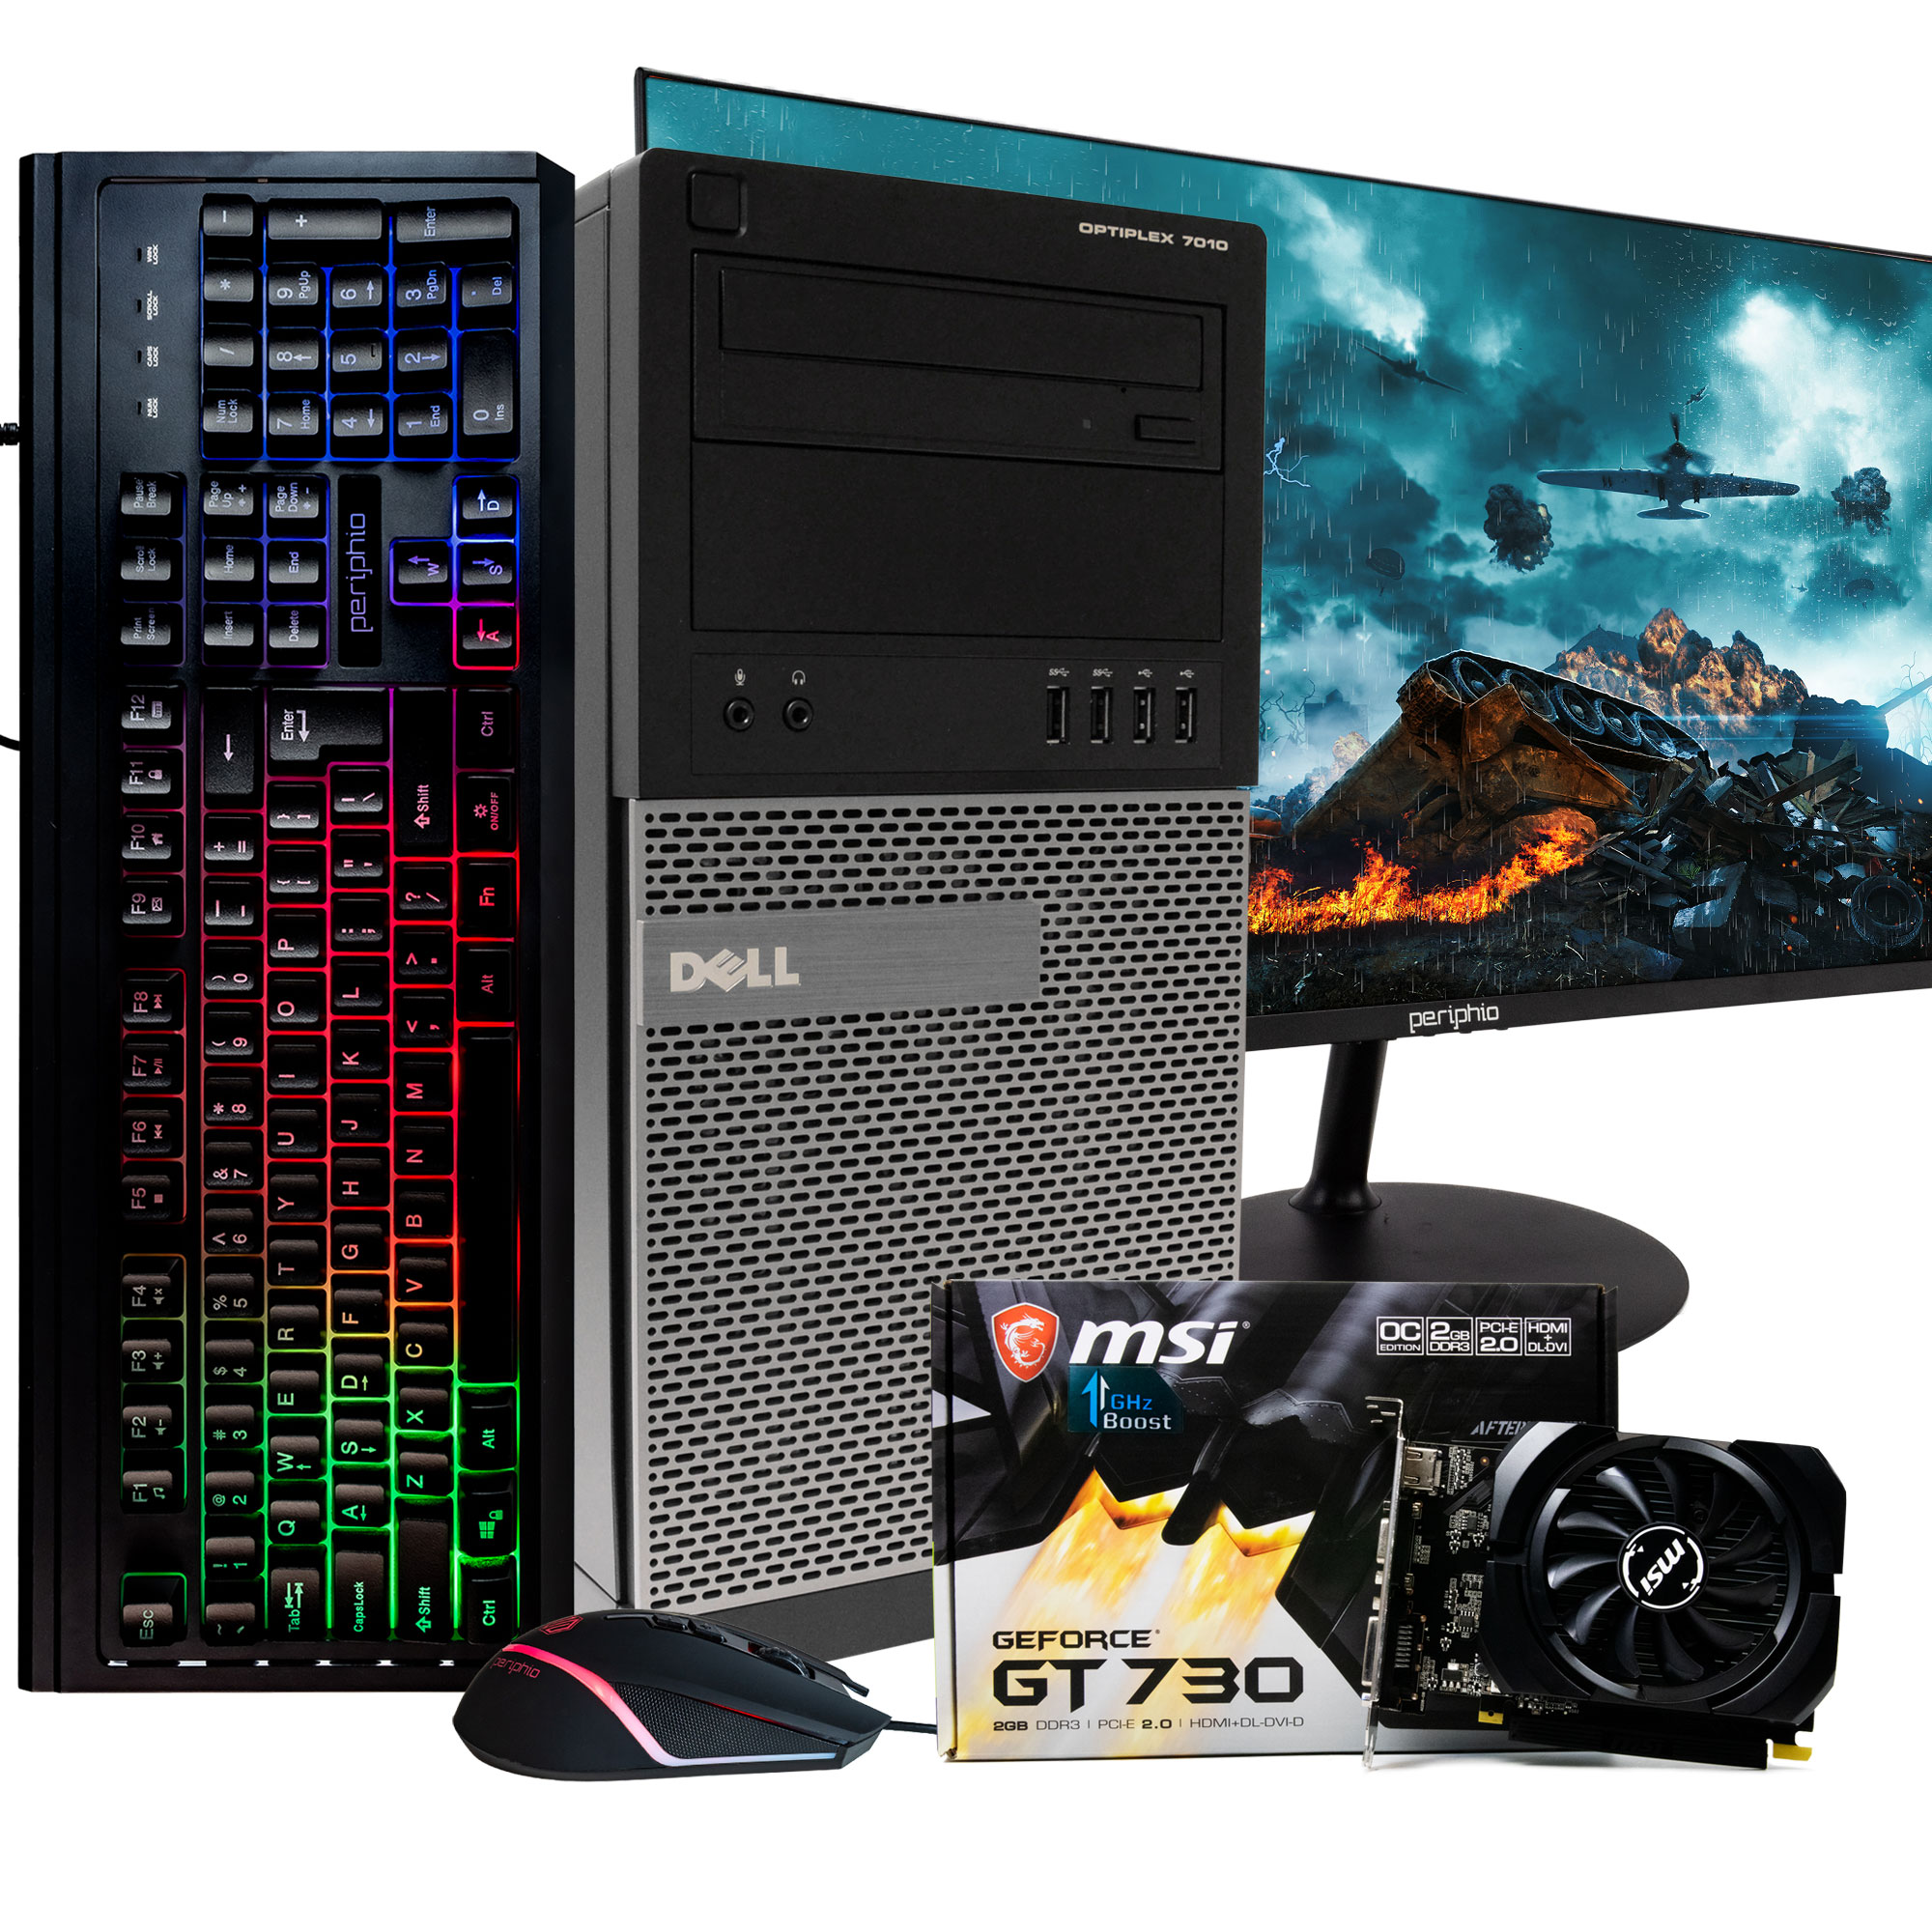 Restored Dell Gaming Computer, Intel Quad-Core i7, GeForce GT 730 (2GB), 240GB SSD + 1TB HDD, 16GB DDR3 RAM, DVD, WIFI, Bluetooth, Windows 10 Home Gaming, NEW 24” LCD, RGB Gaming Bundle (Refurbished) - image 1 of 8